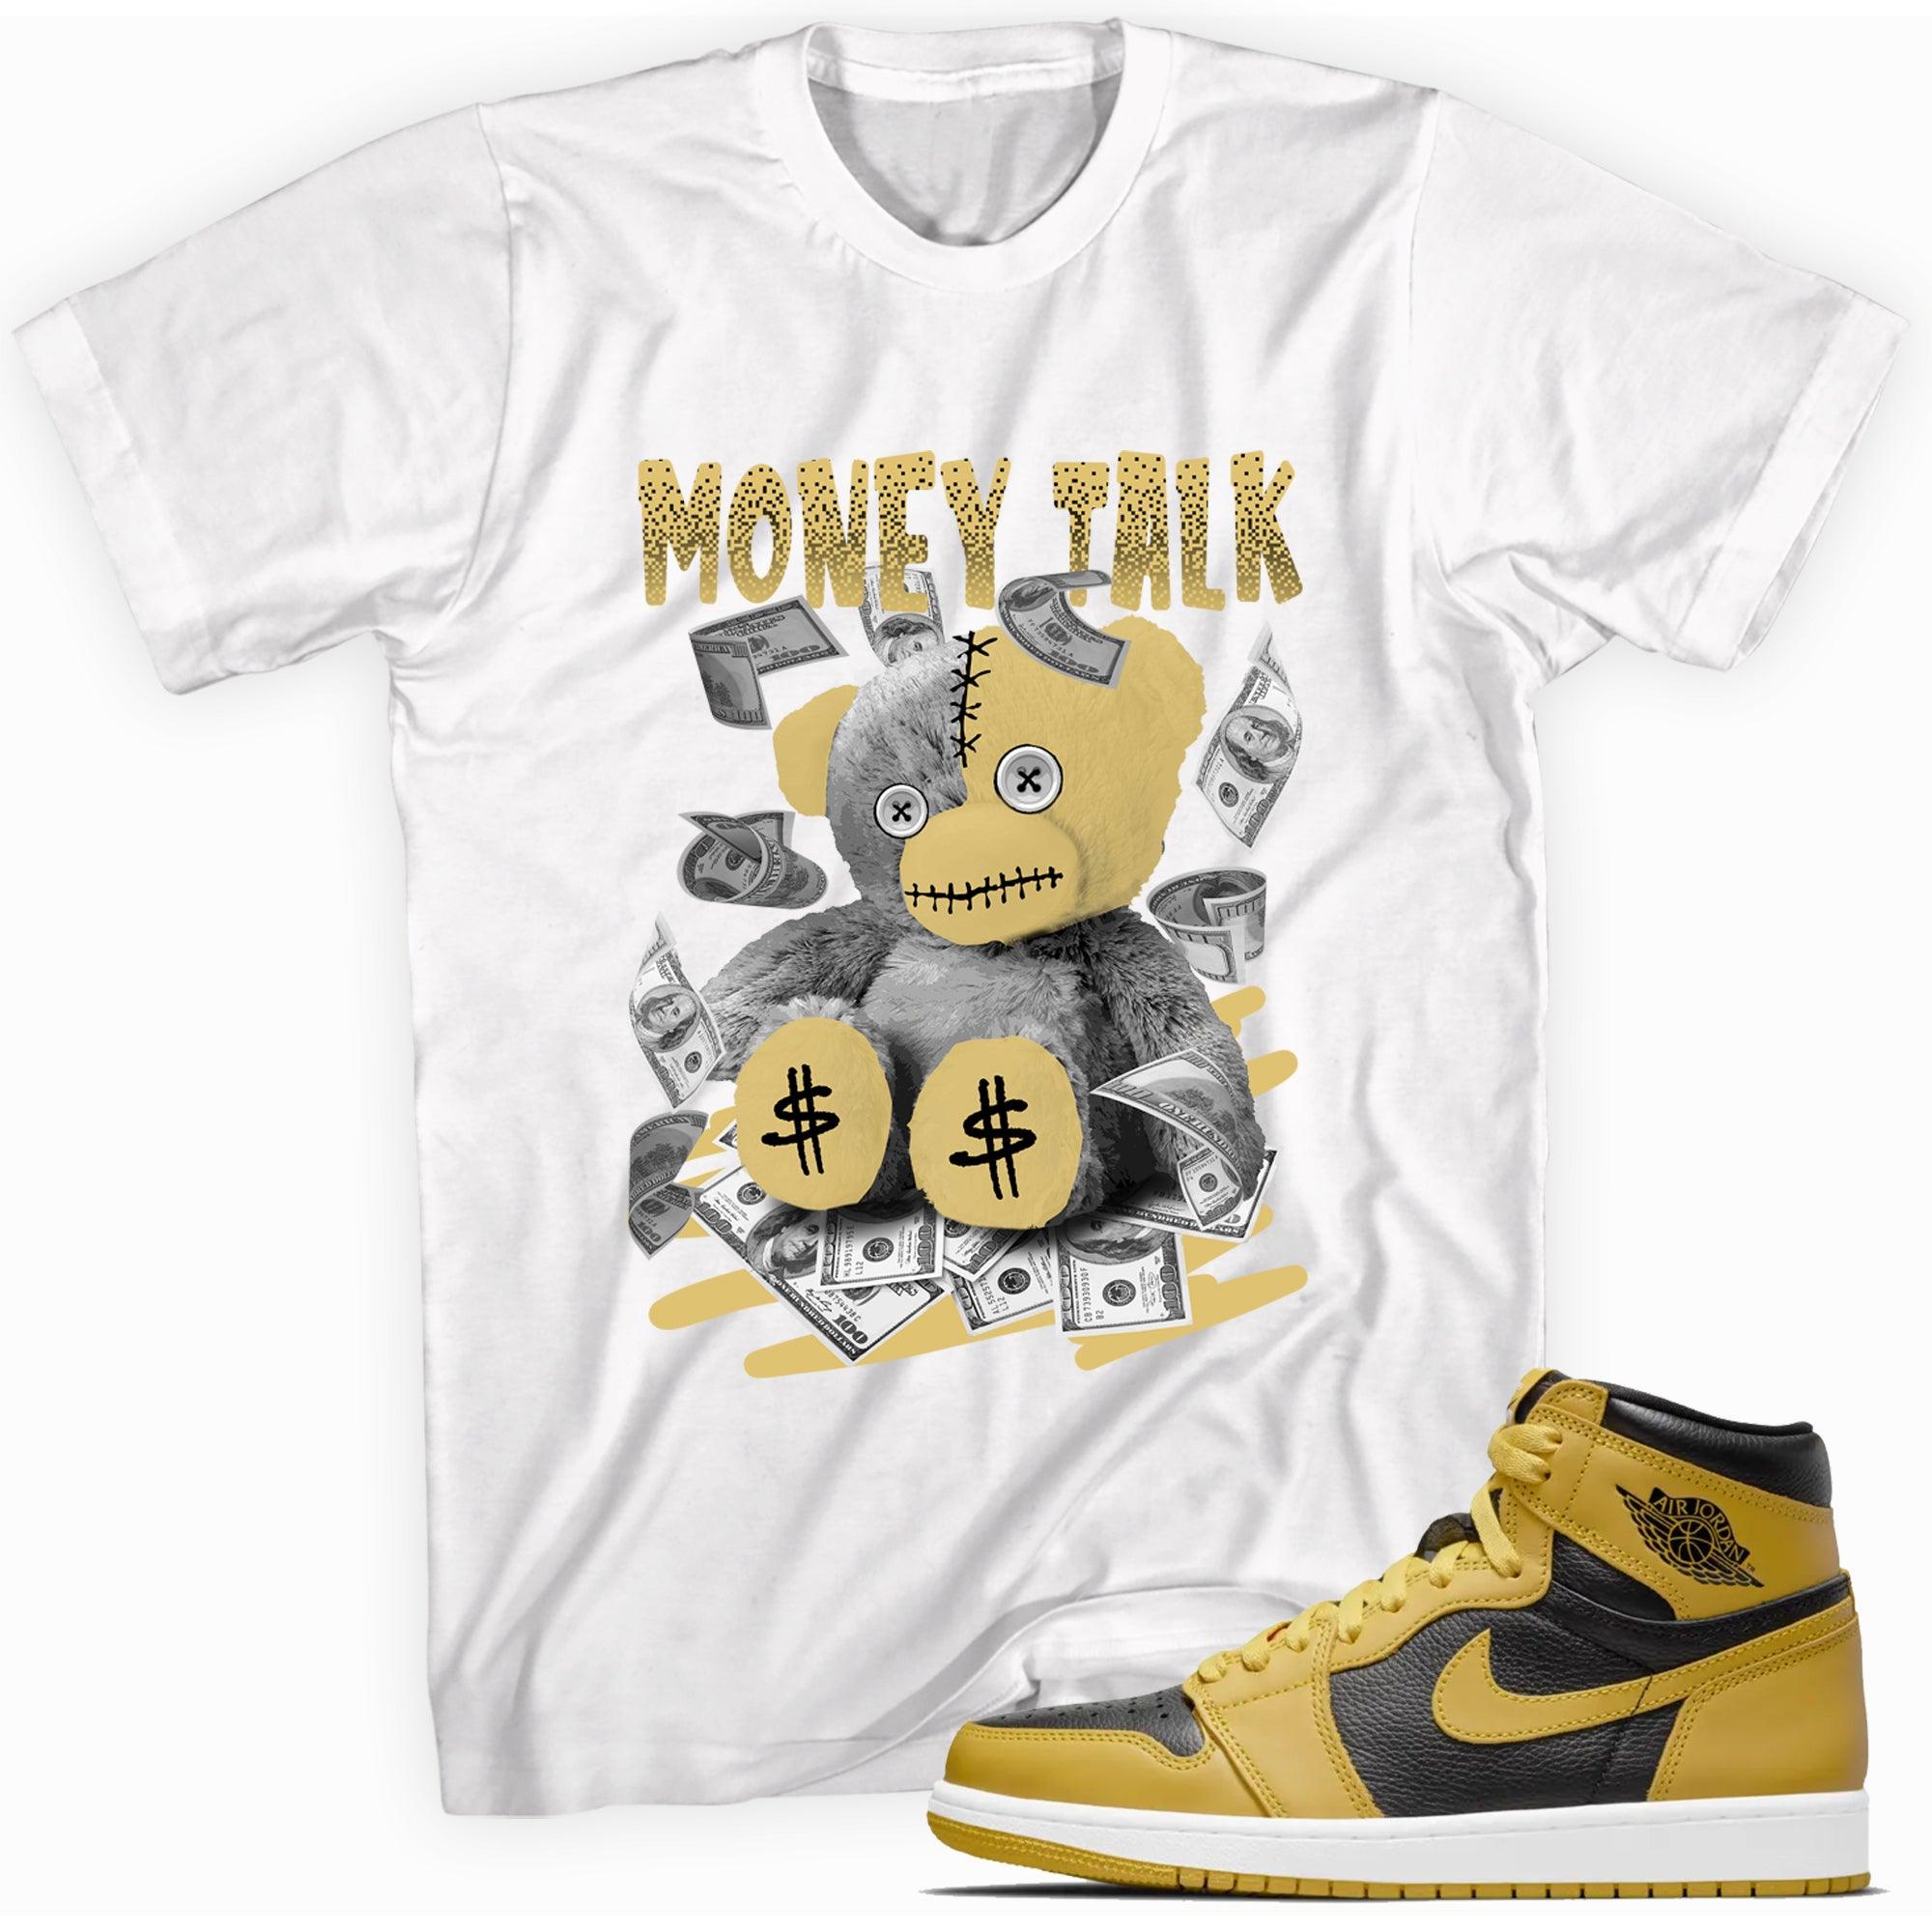 Money Talk Sneaker Tee AJ 1 Retro High Pollen phot